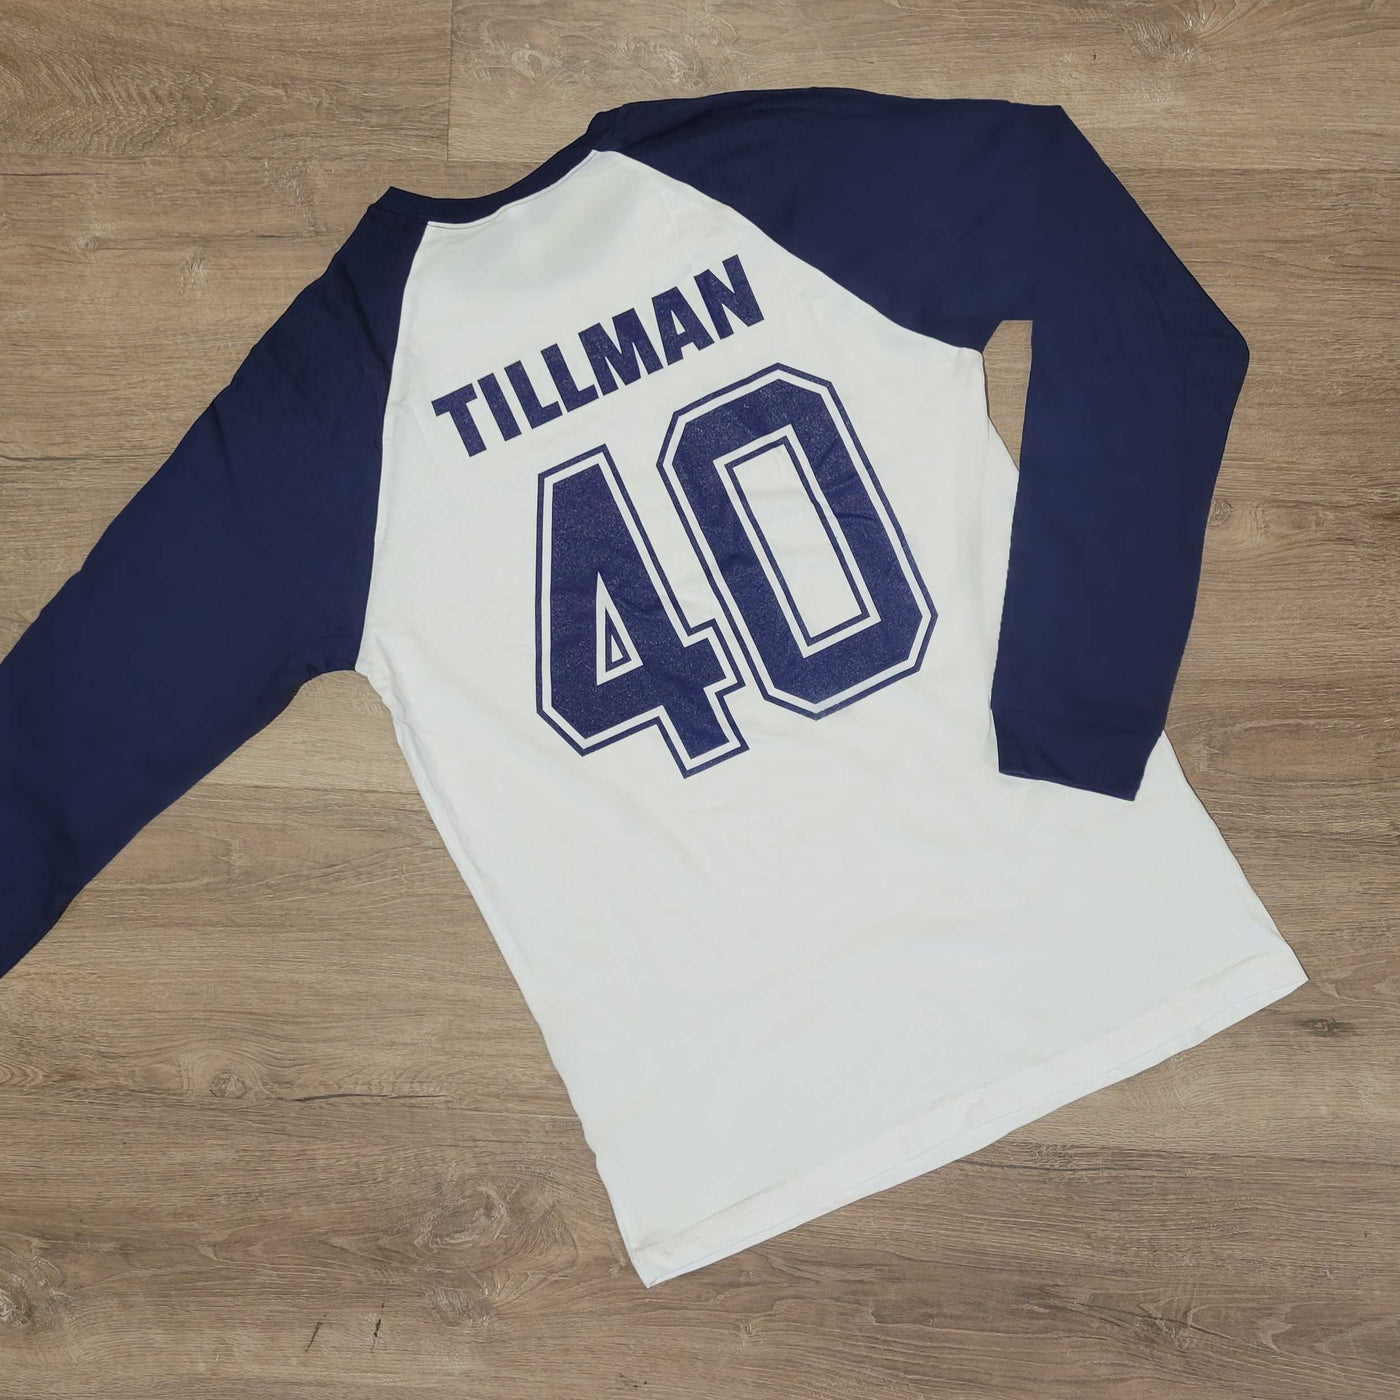 Tillman "40" Baseball Tee